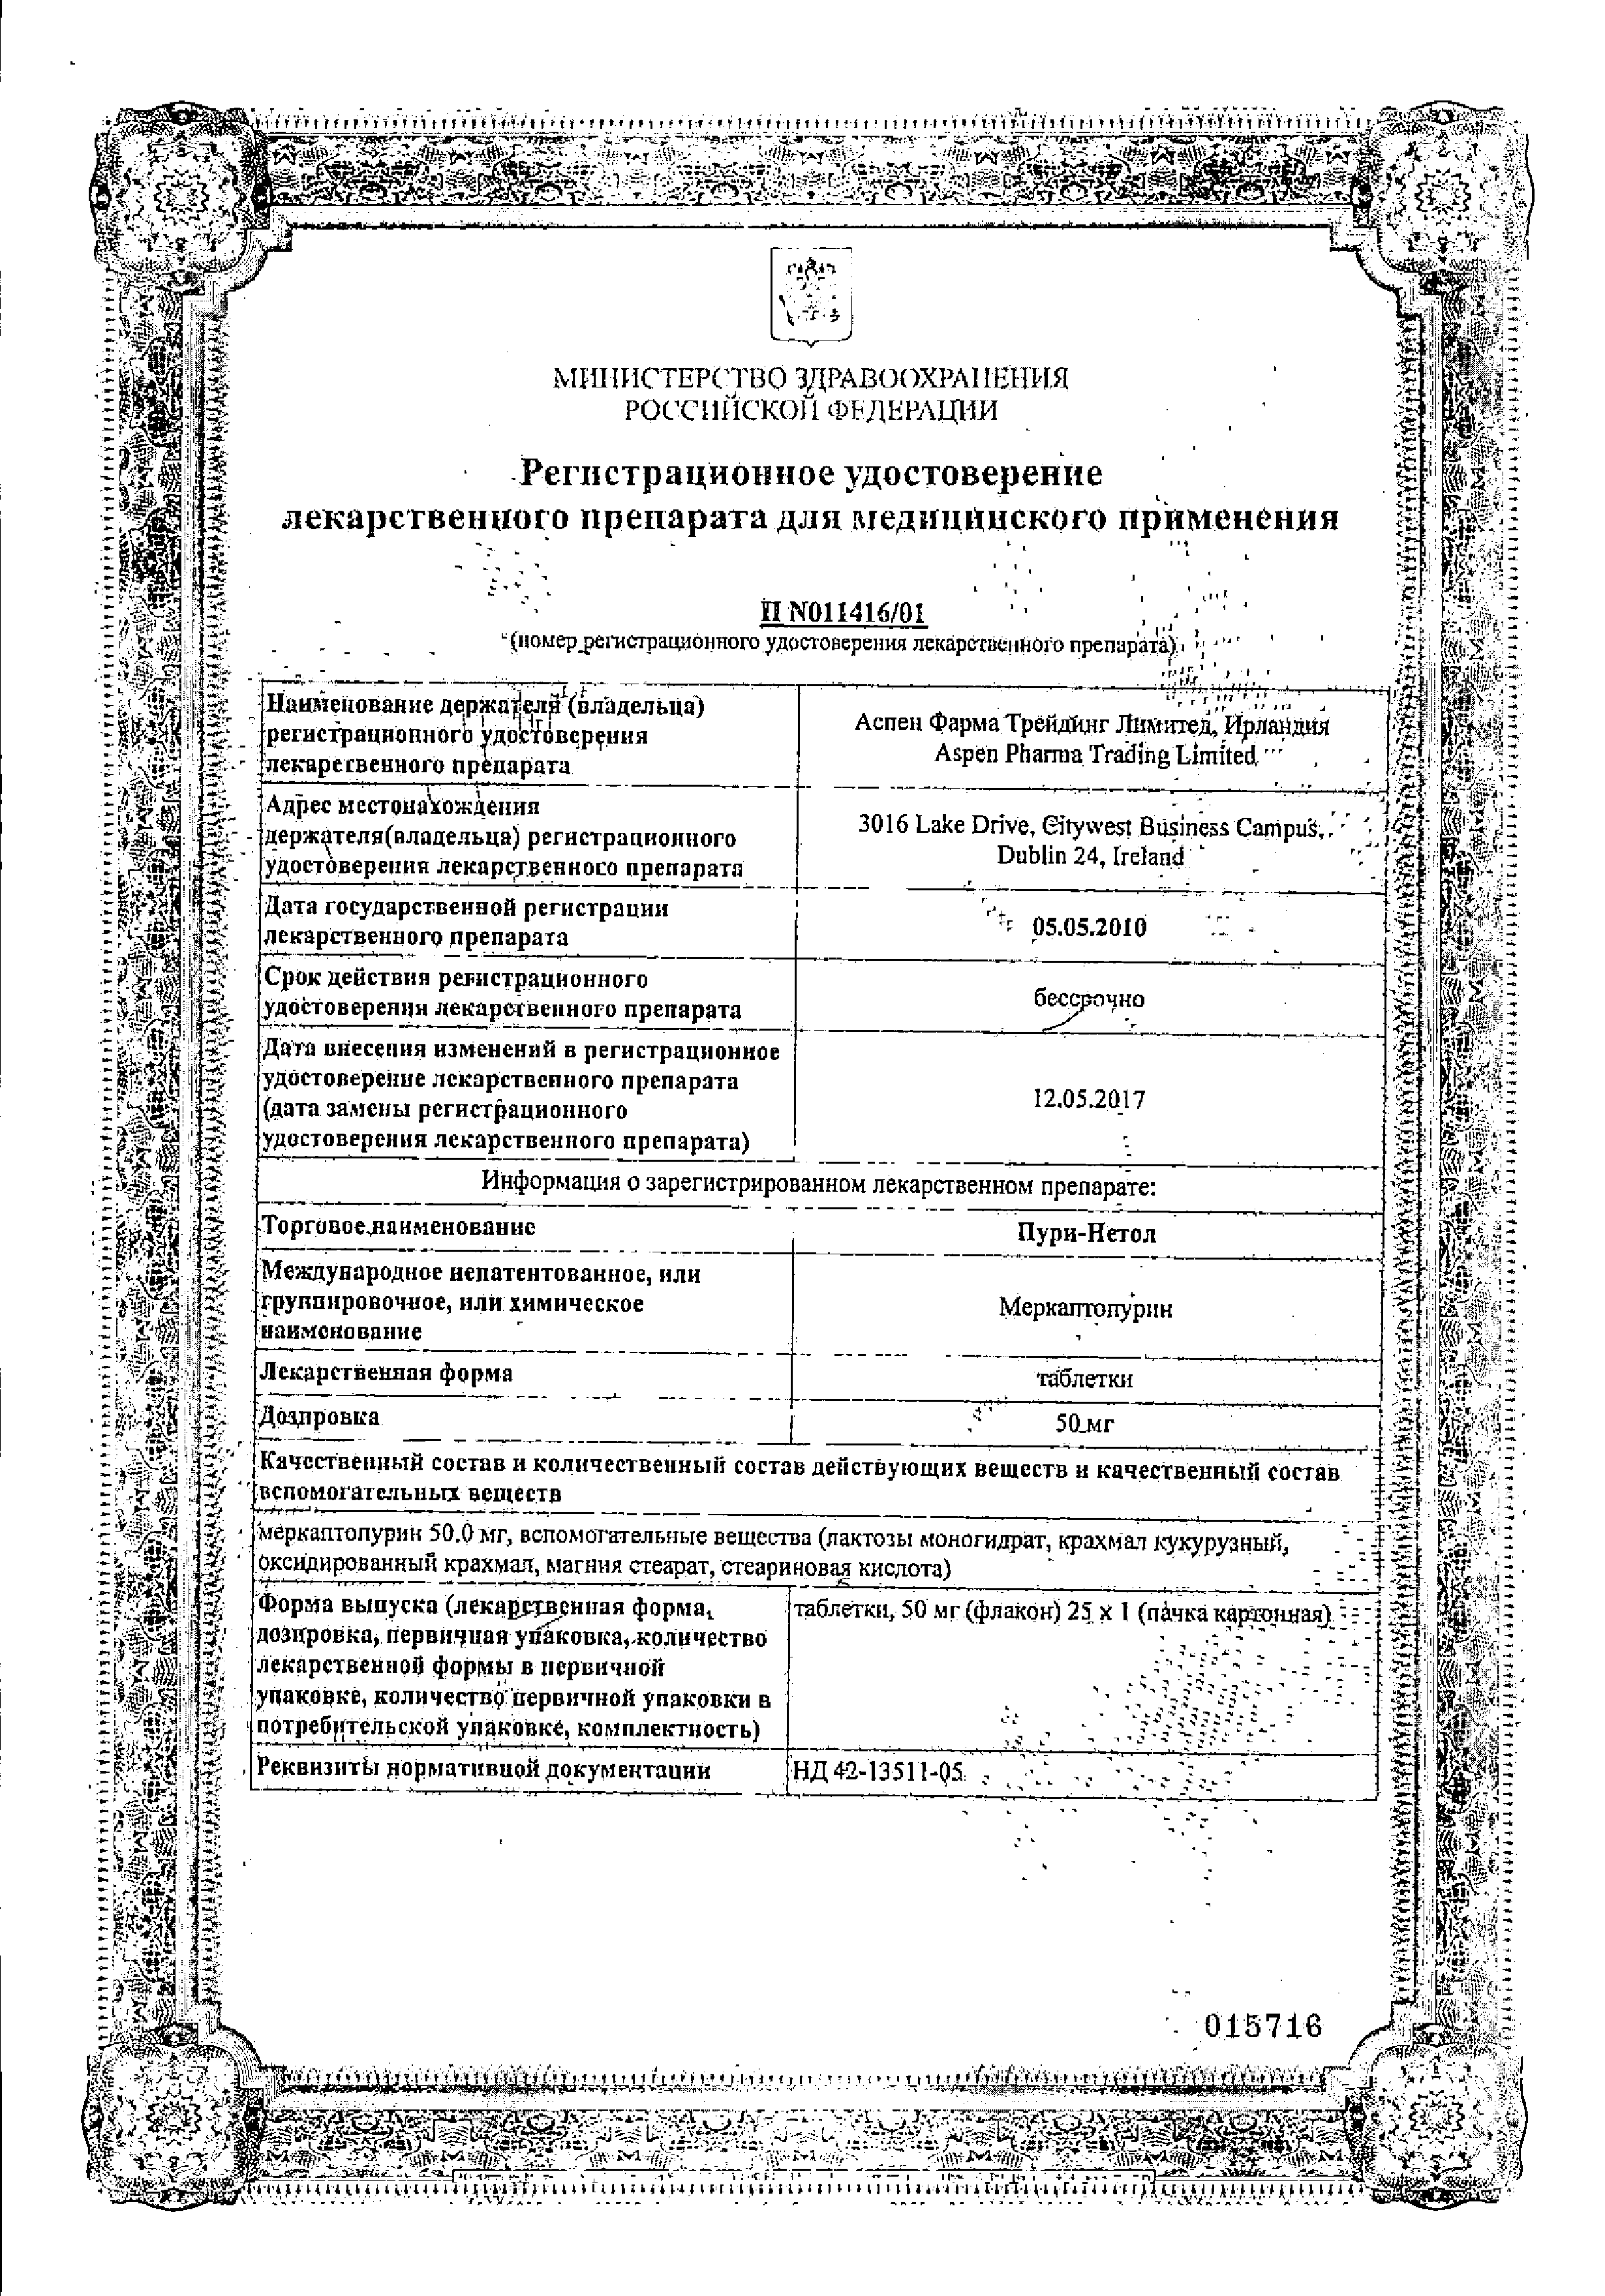 Пури-Нетол сертификат